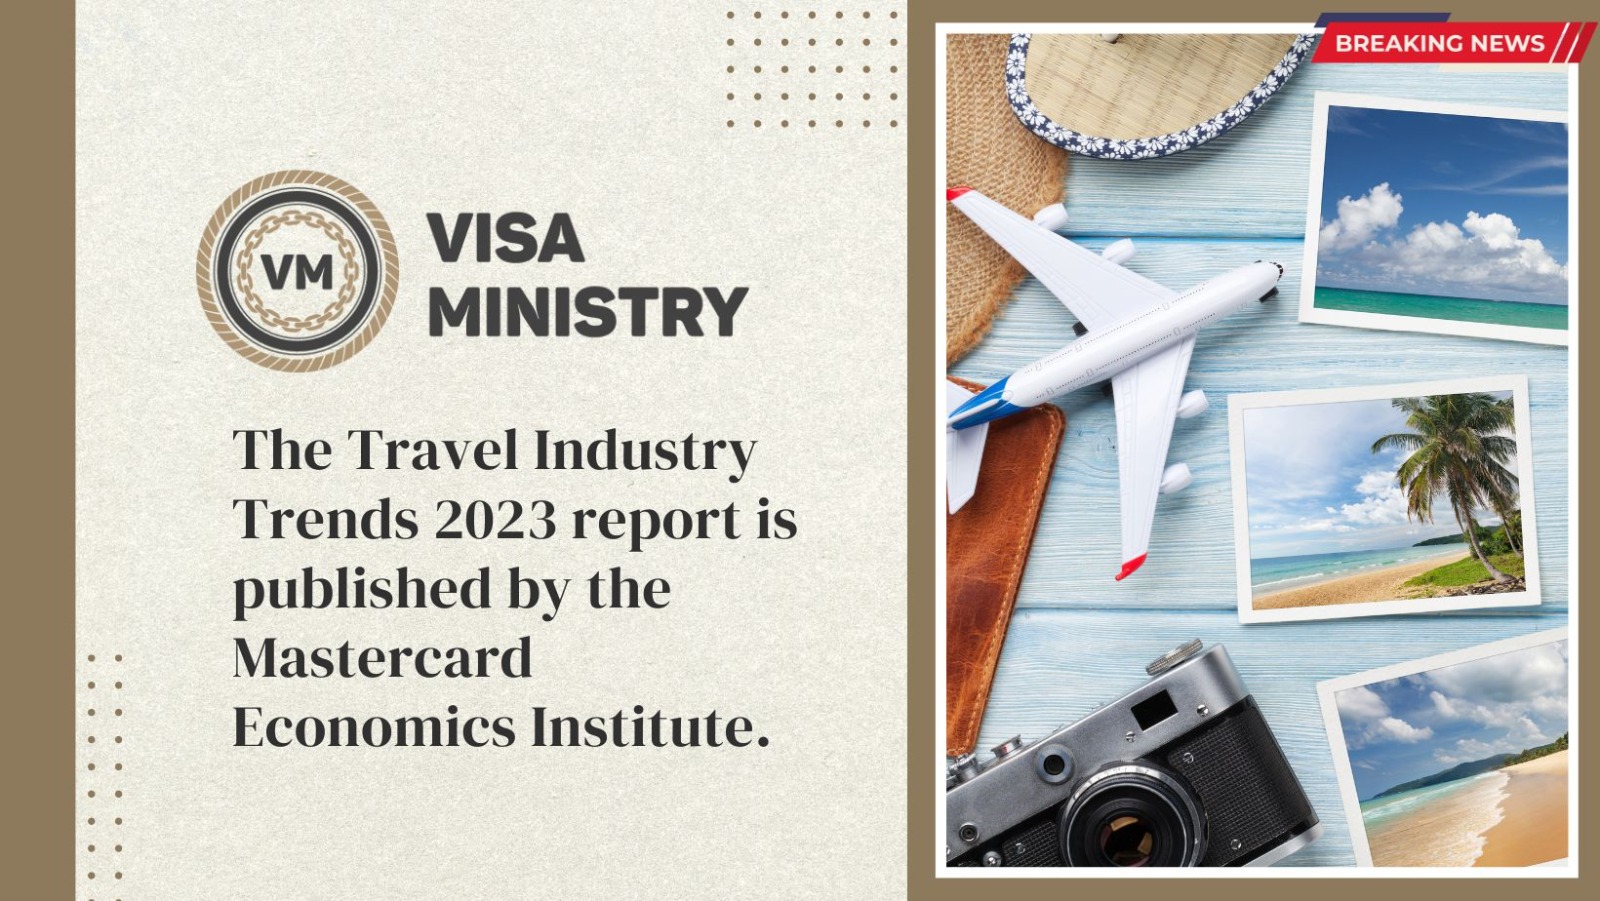 mastercard economics institute travel industry trends 2023